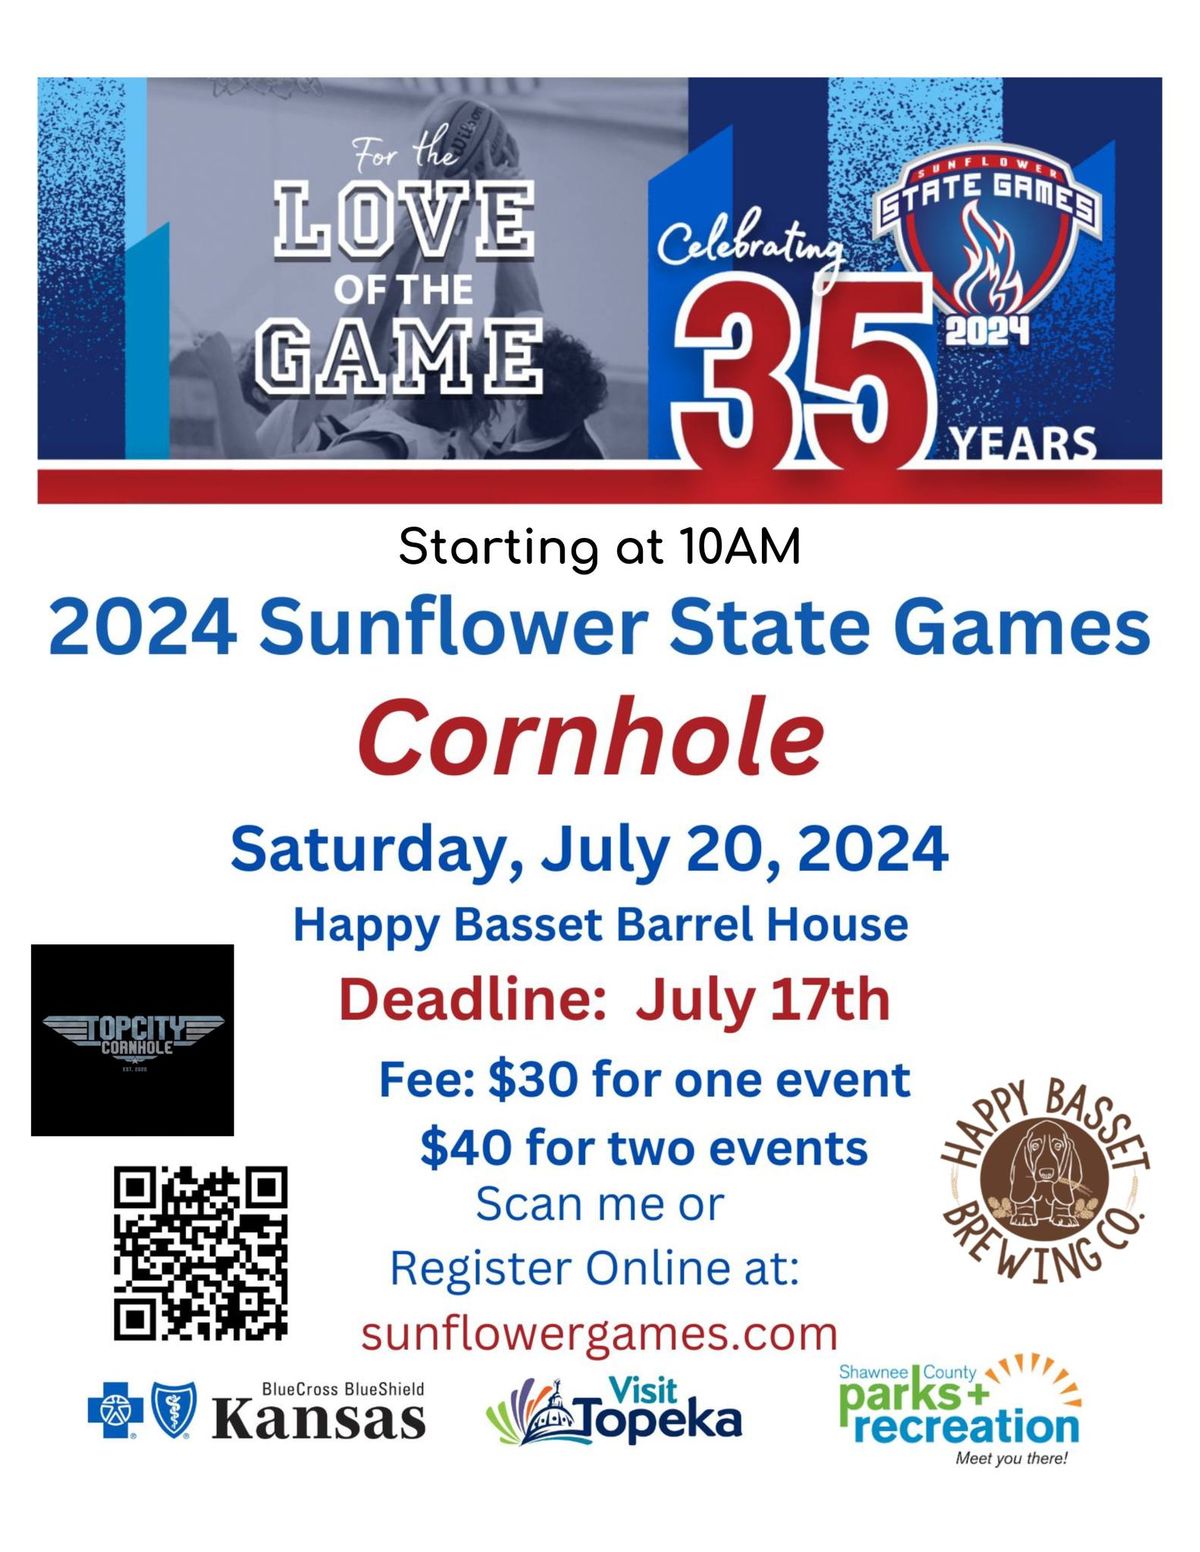 Sunflower States Games - Cornhole 2024